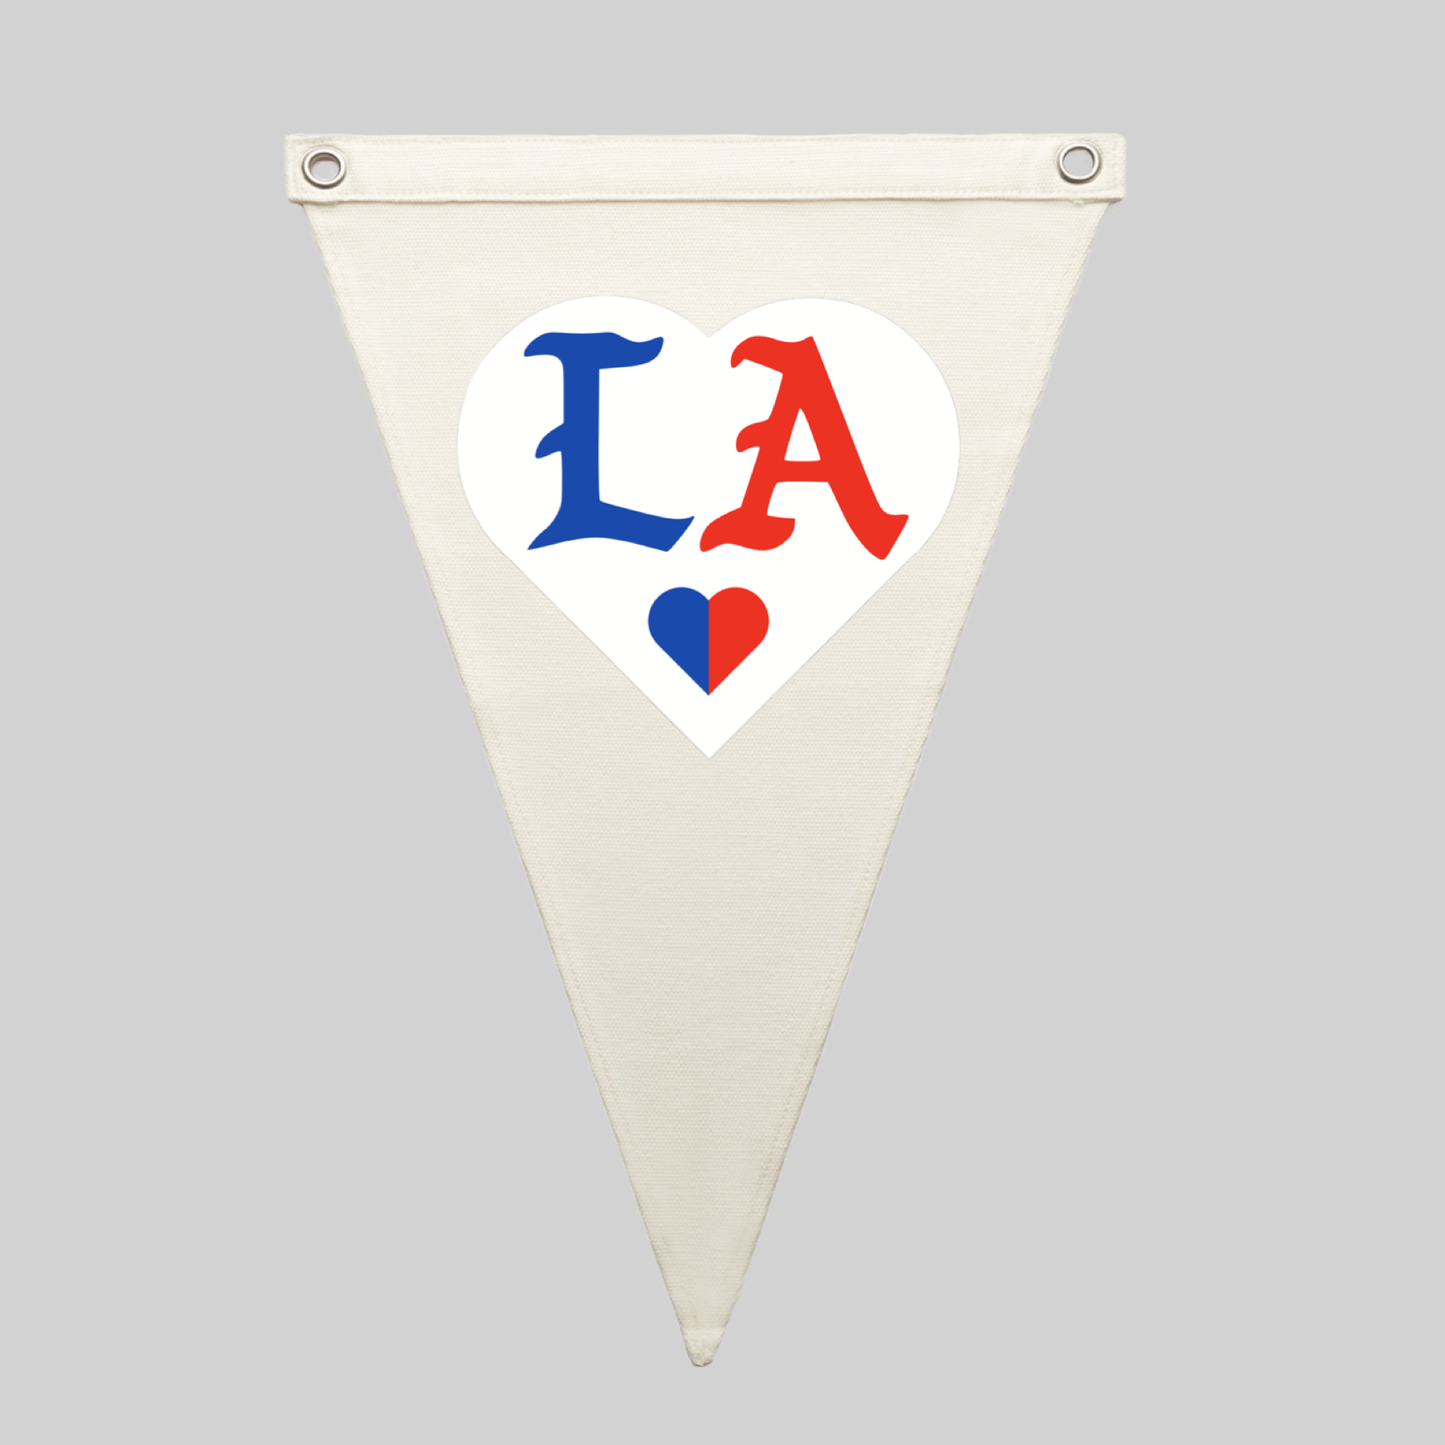 LOVE AMOUR•LA_White Pennant Flag